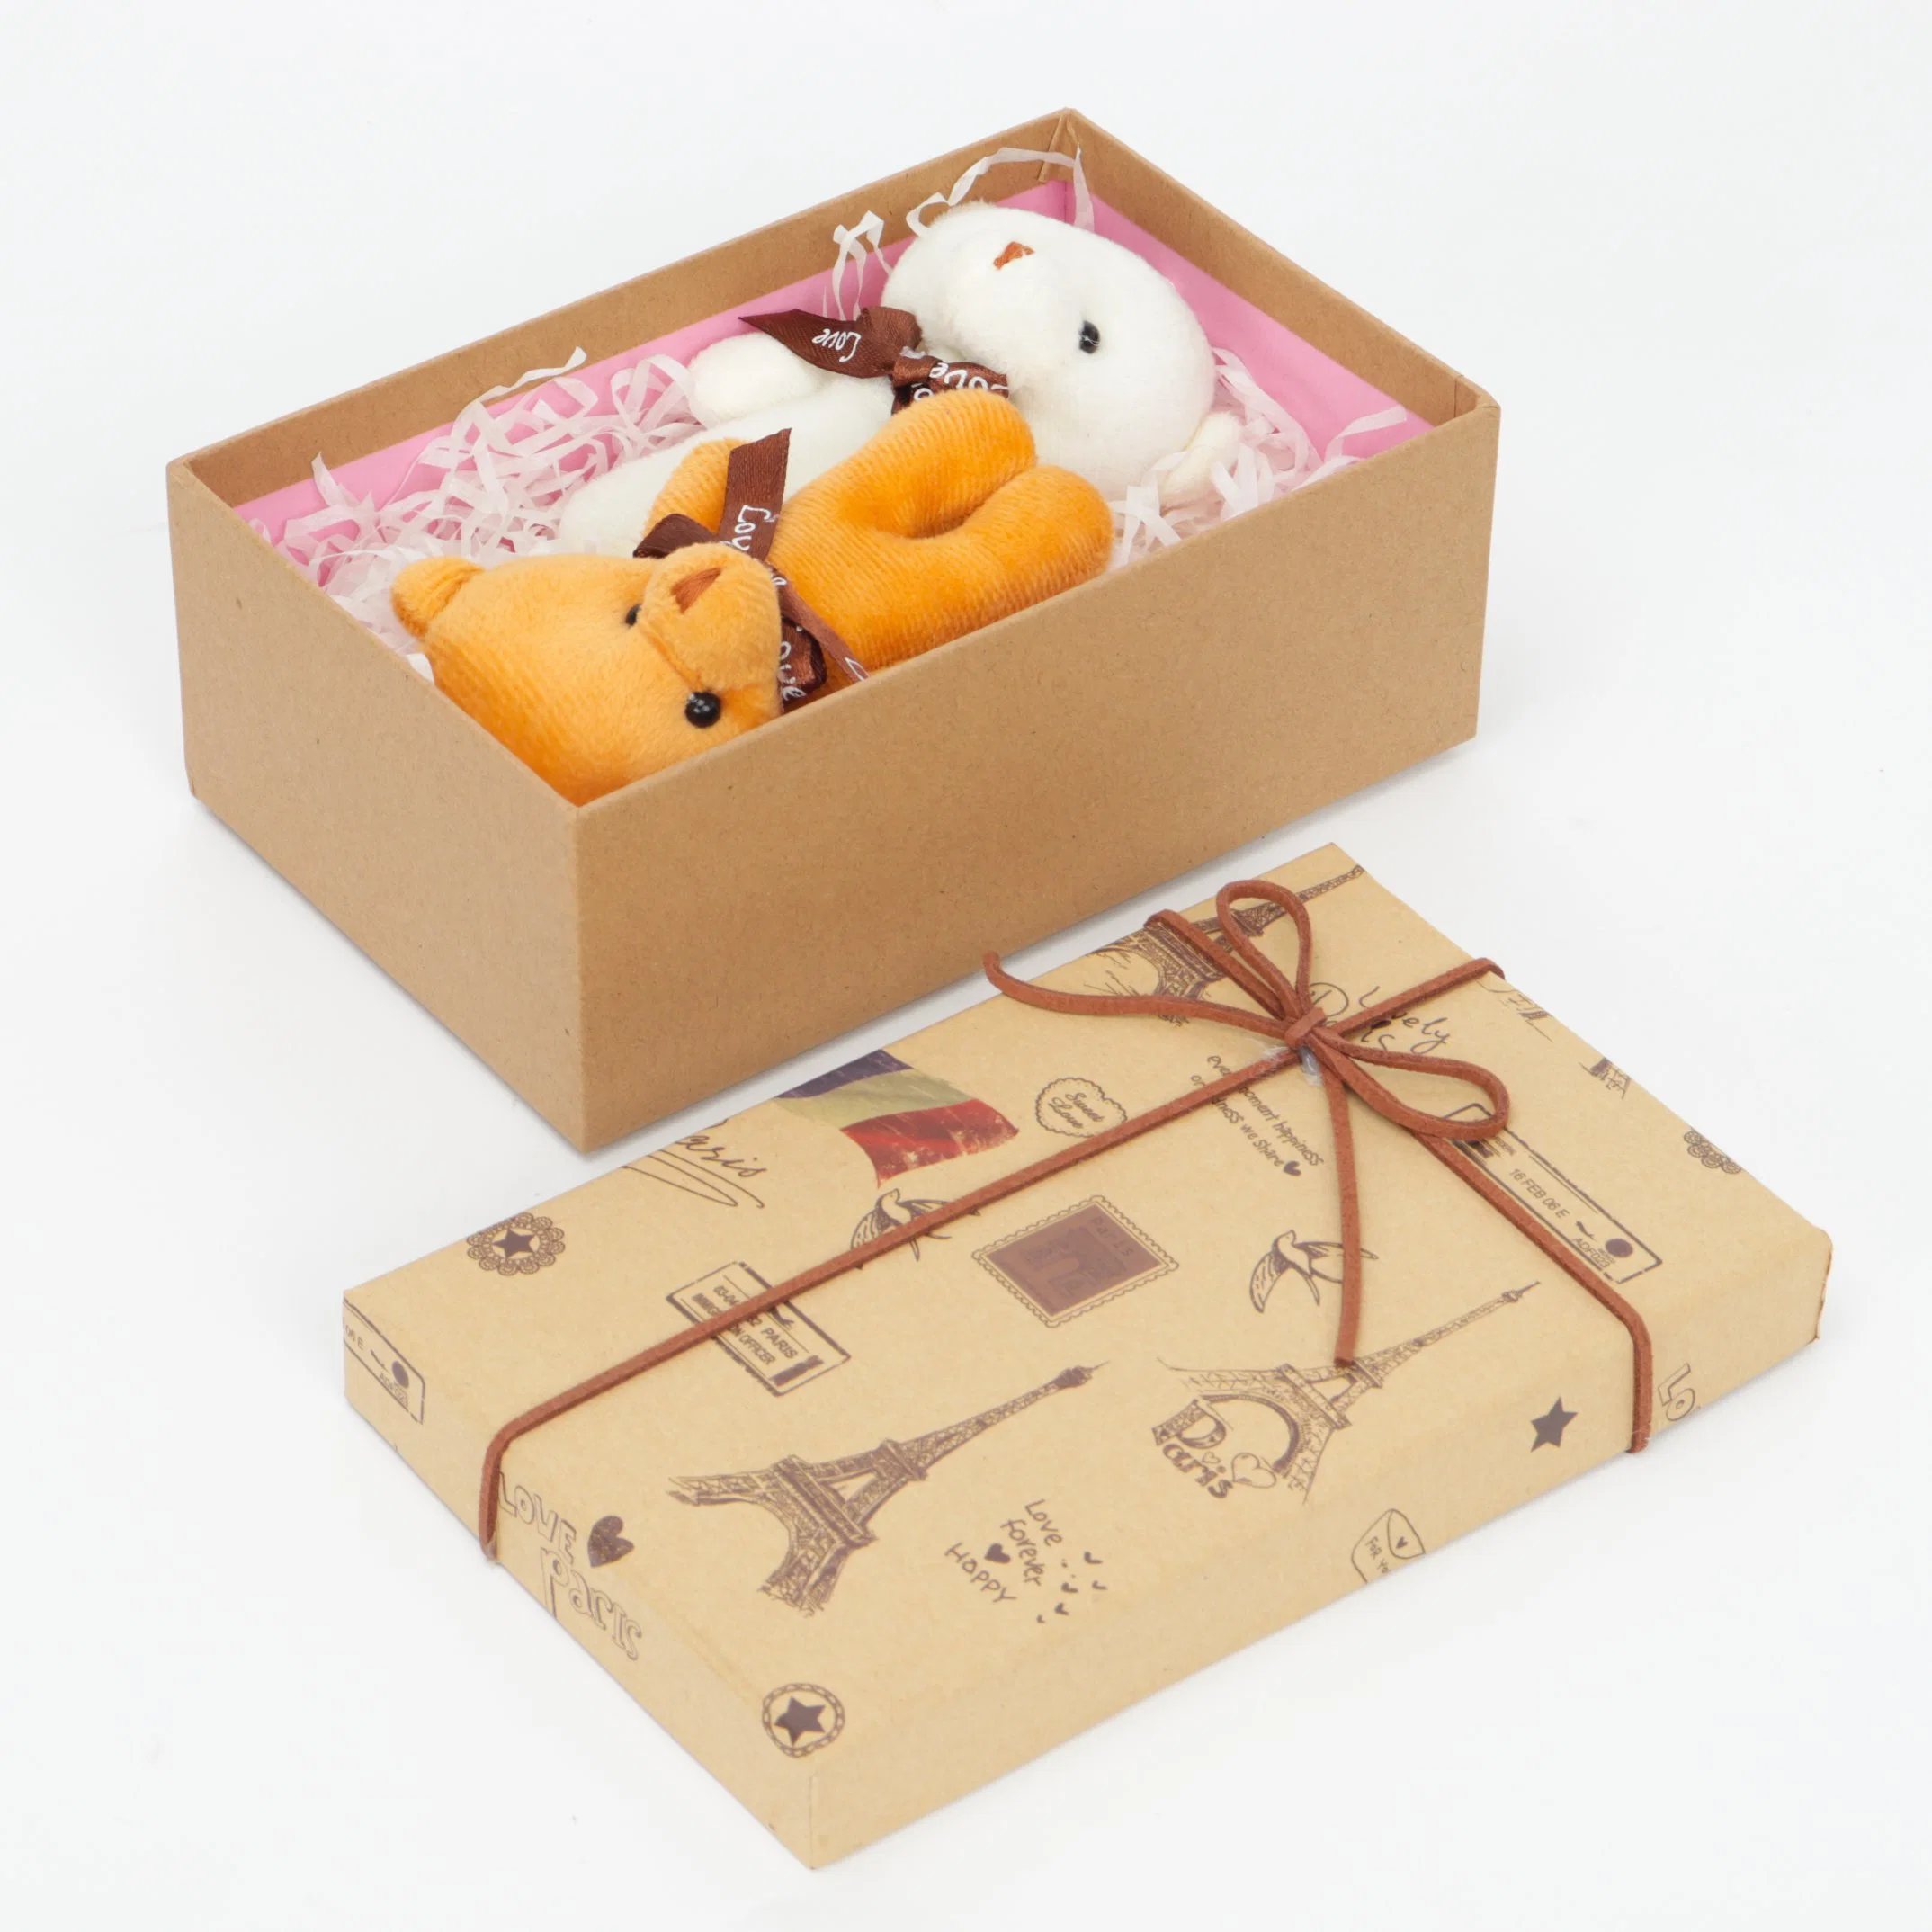 Custom Design Paper Gift Boxes Amazon Packaging Boxes Paper Boxes Cosmetic Boxes Game Boxes Gift Premium Paper Boxes